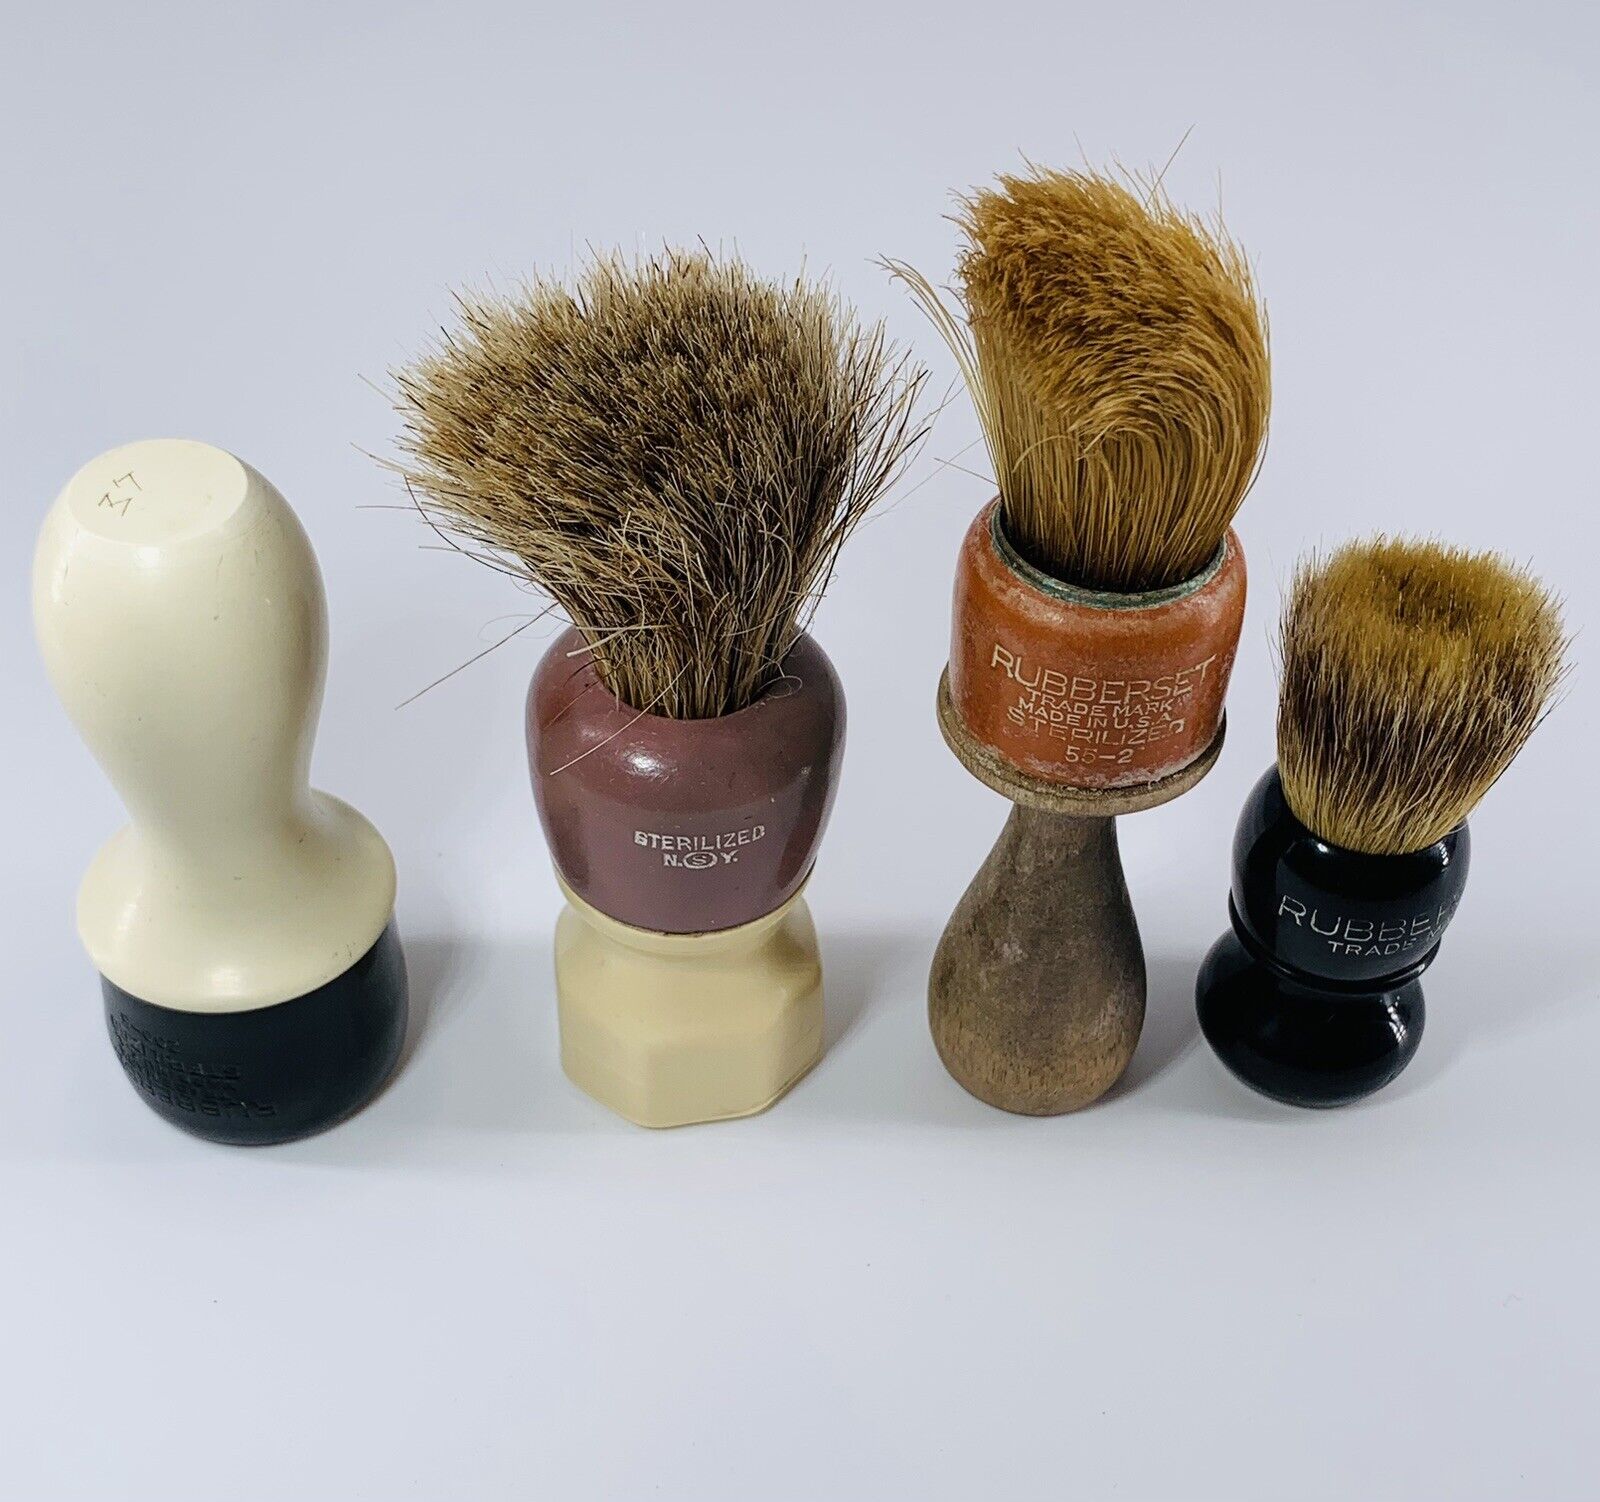 Lot of 4 Vintage Rubberset & More Barber Shop Shaving Brushes, Used